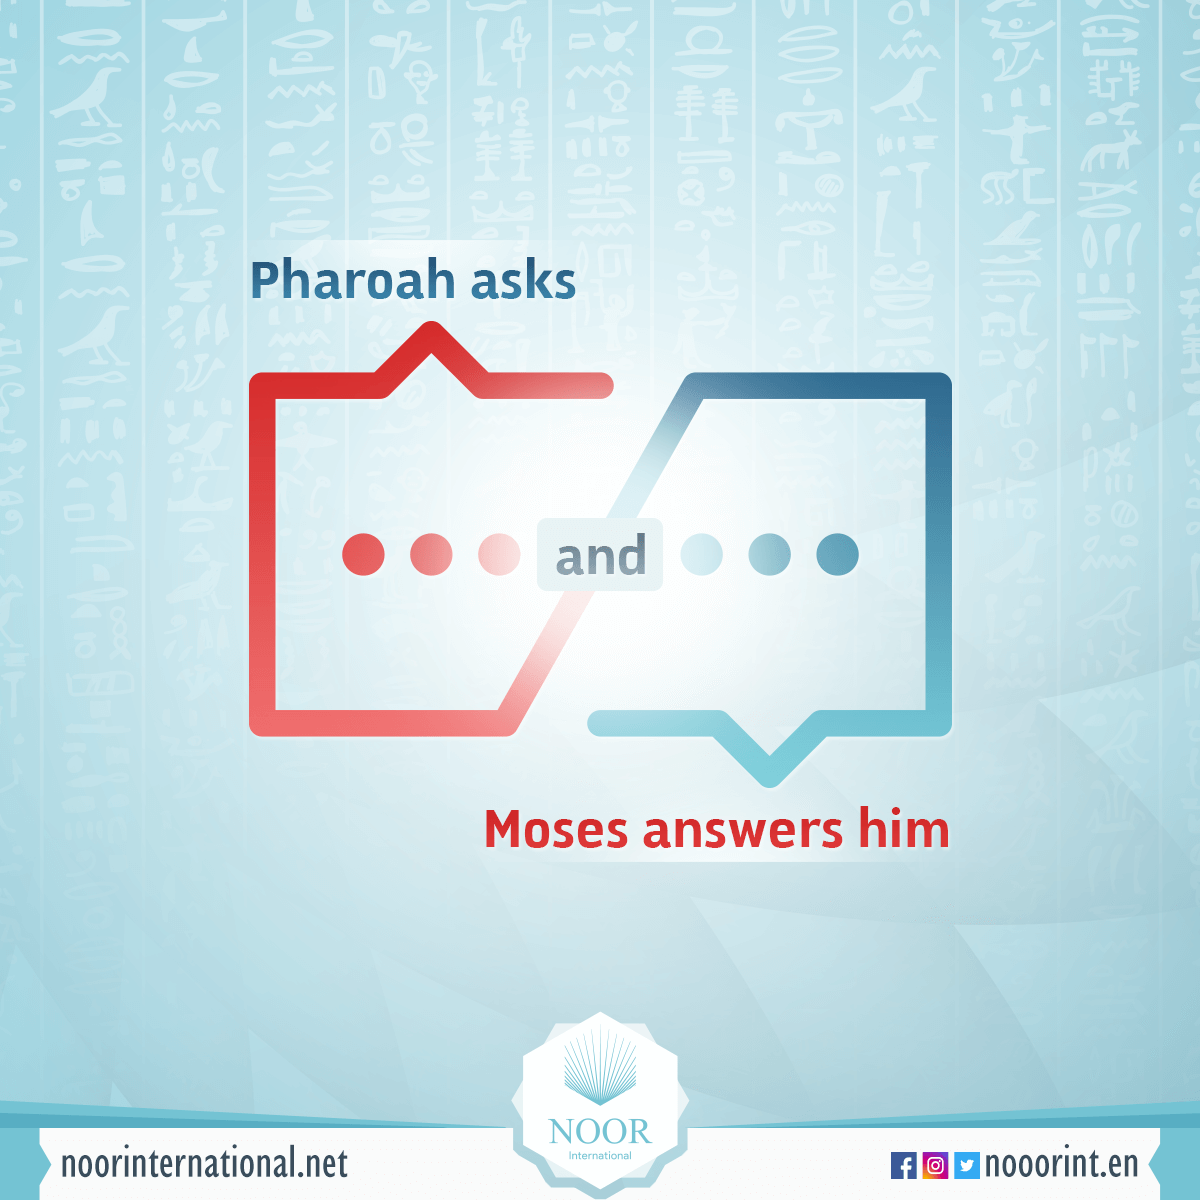 Pharoah asks and Moses answers him.